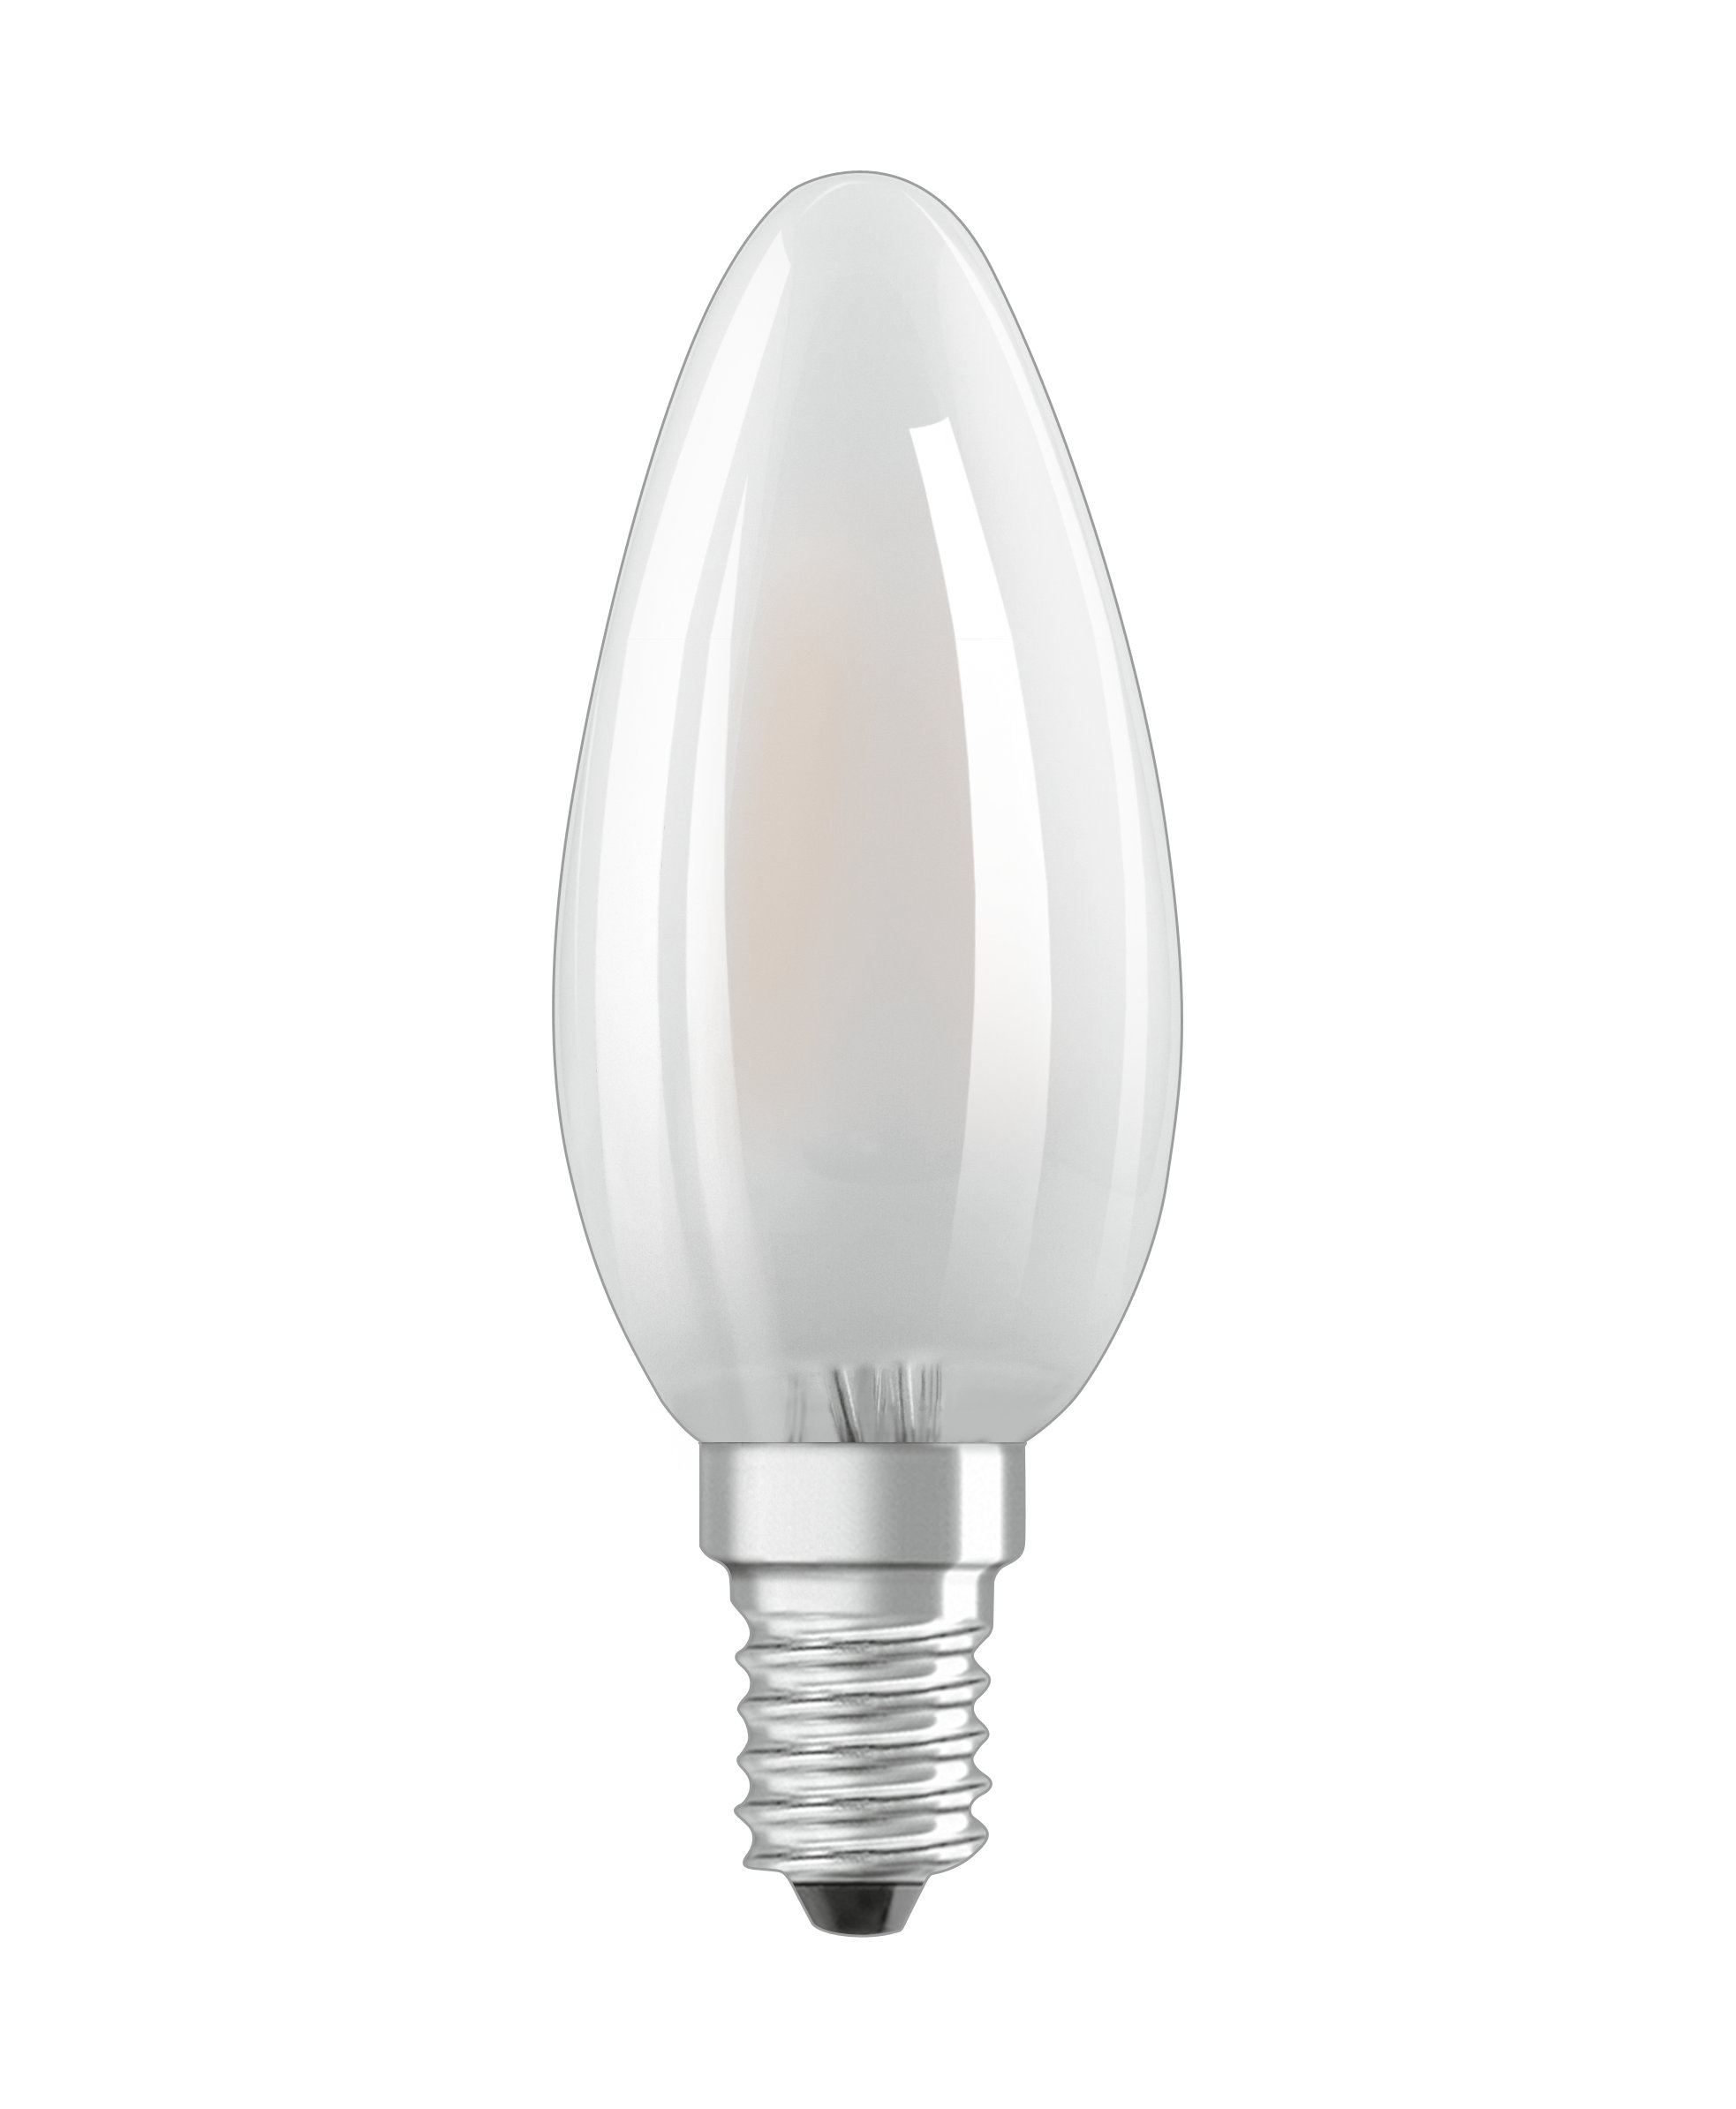 DIM Lumen LED B Warmweiß 806 Retrofit Lampe LED OSRAM  CLASSIC